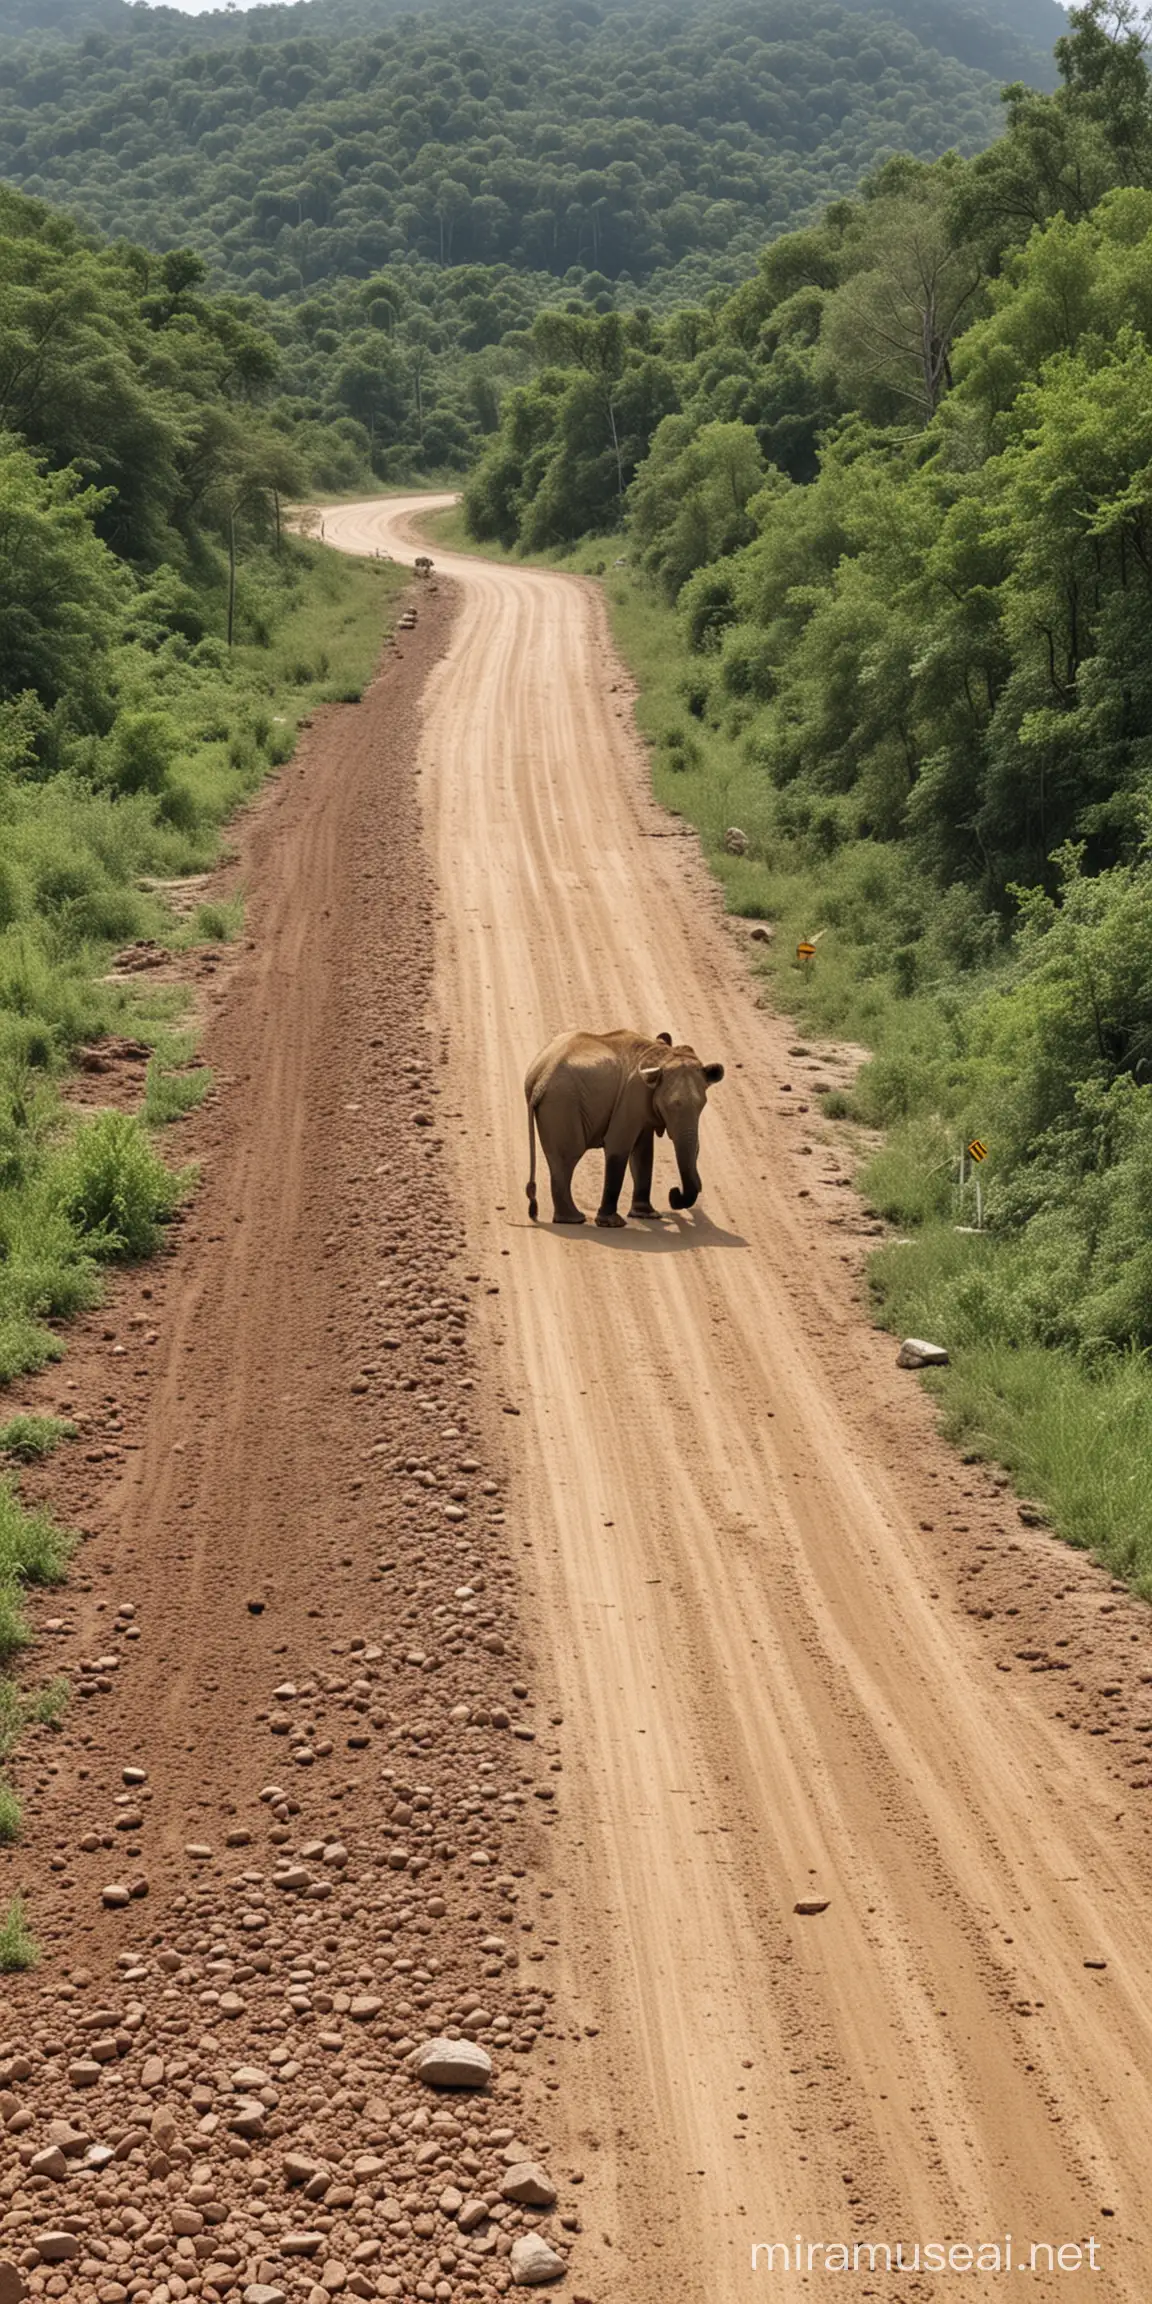 The effect of road construction on animal habitat